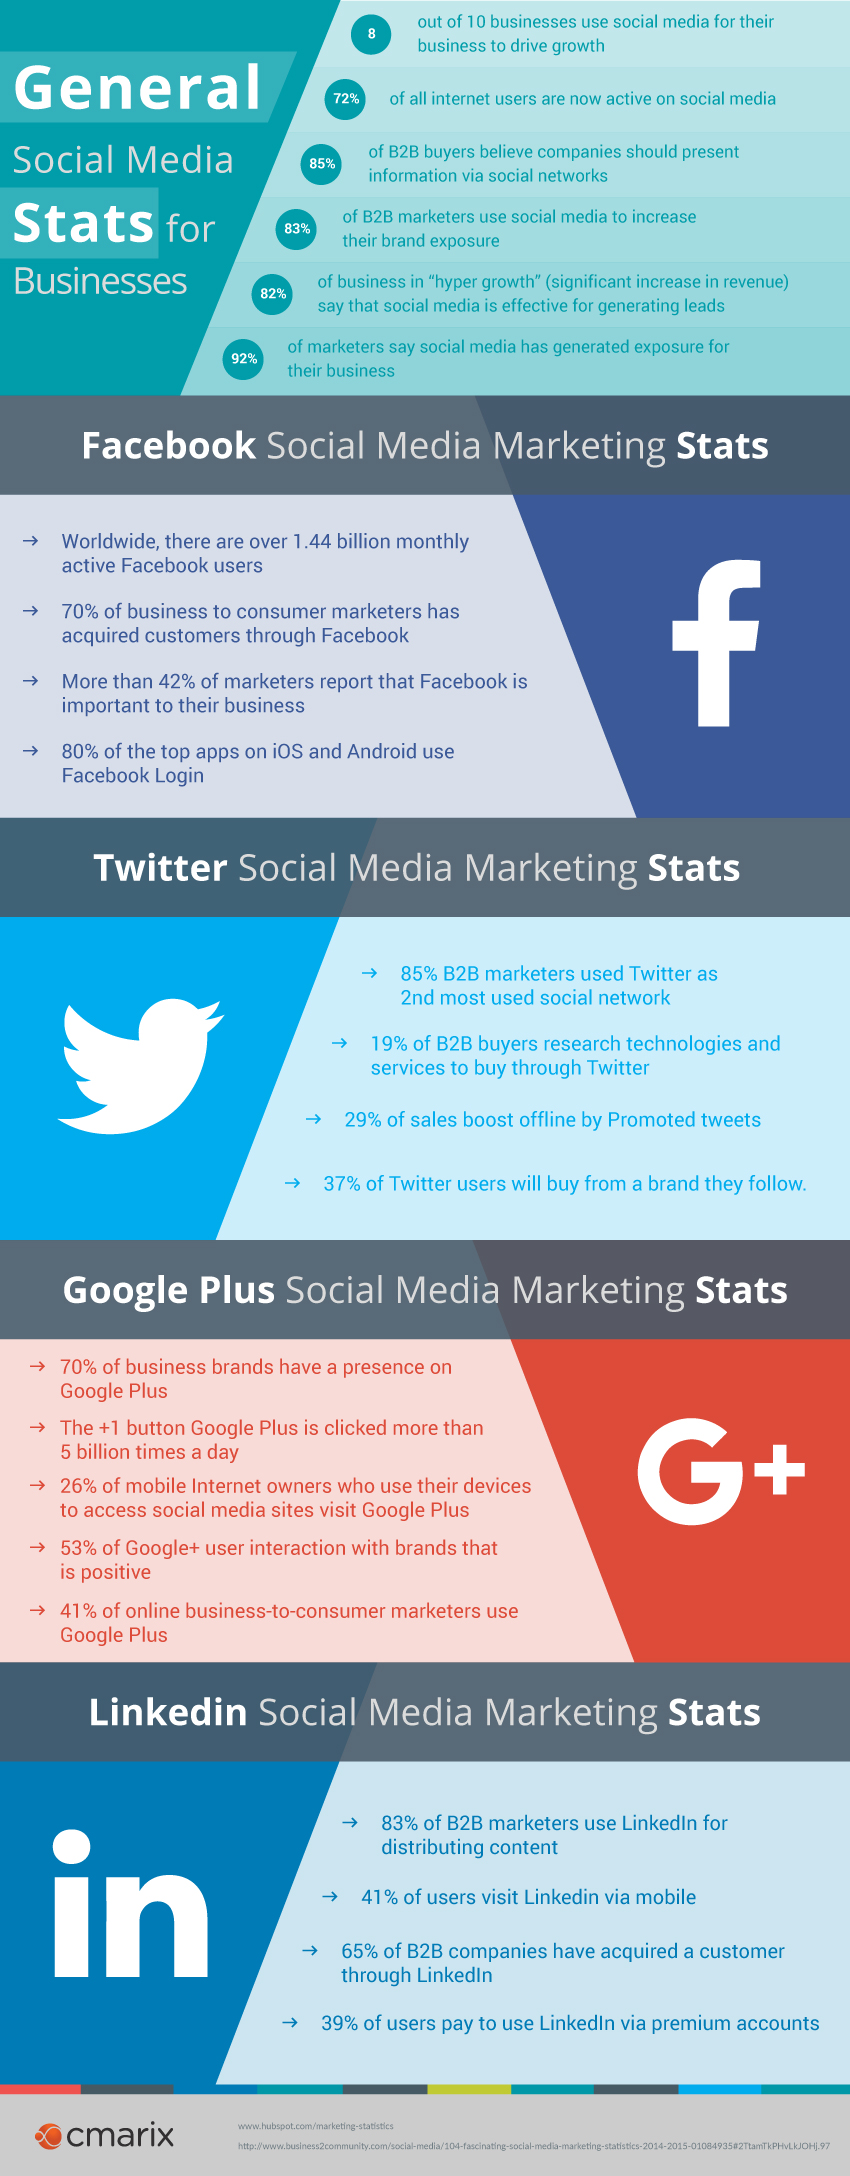 Social Media Stats for Businesses